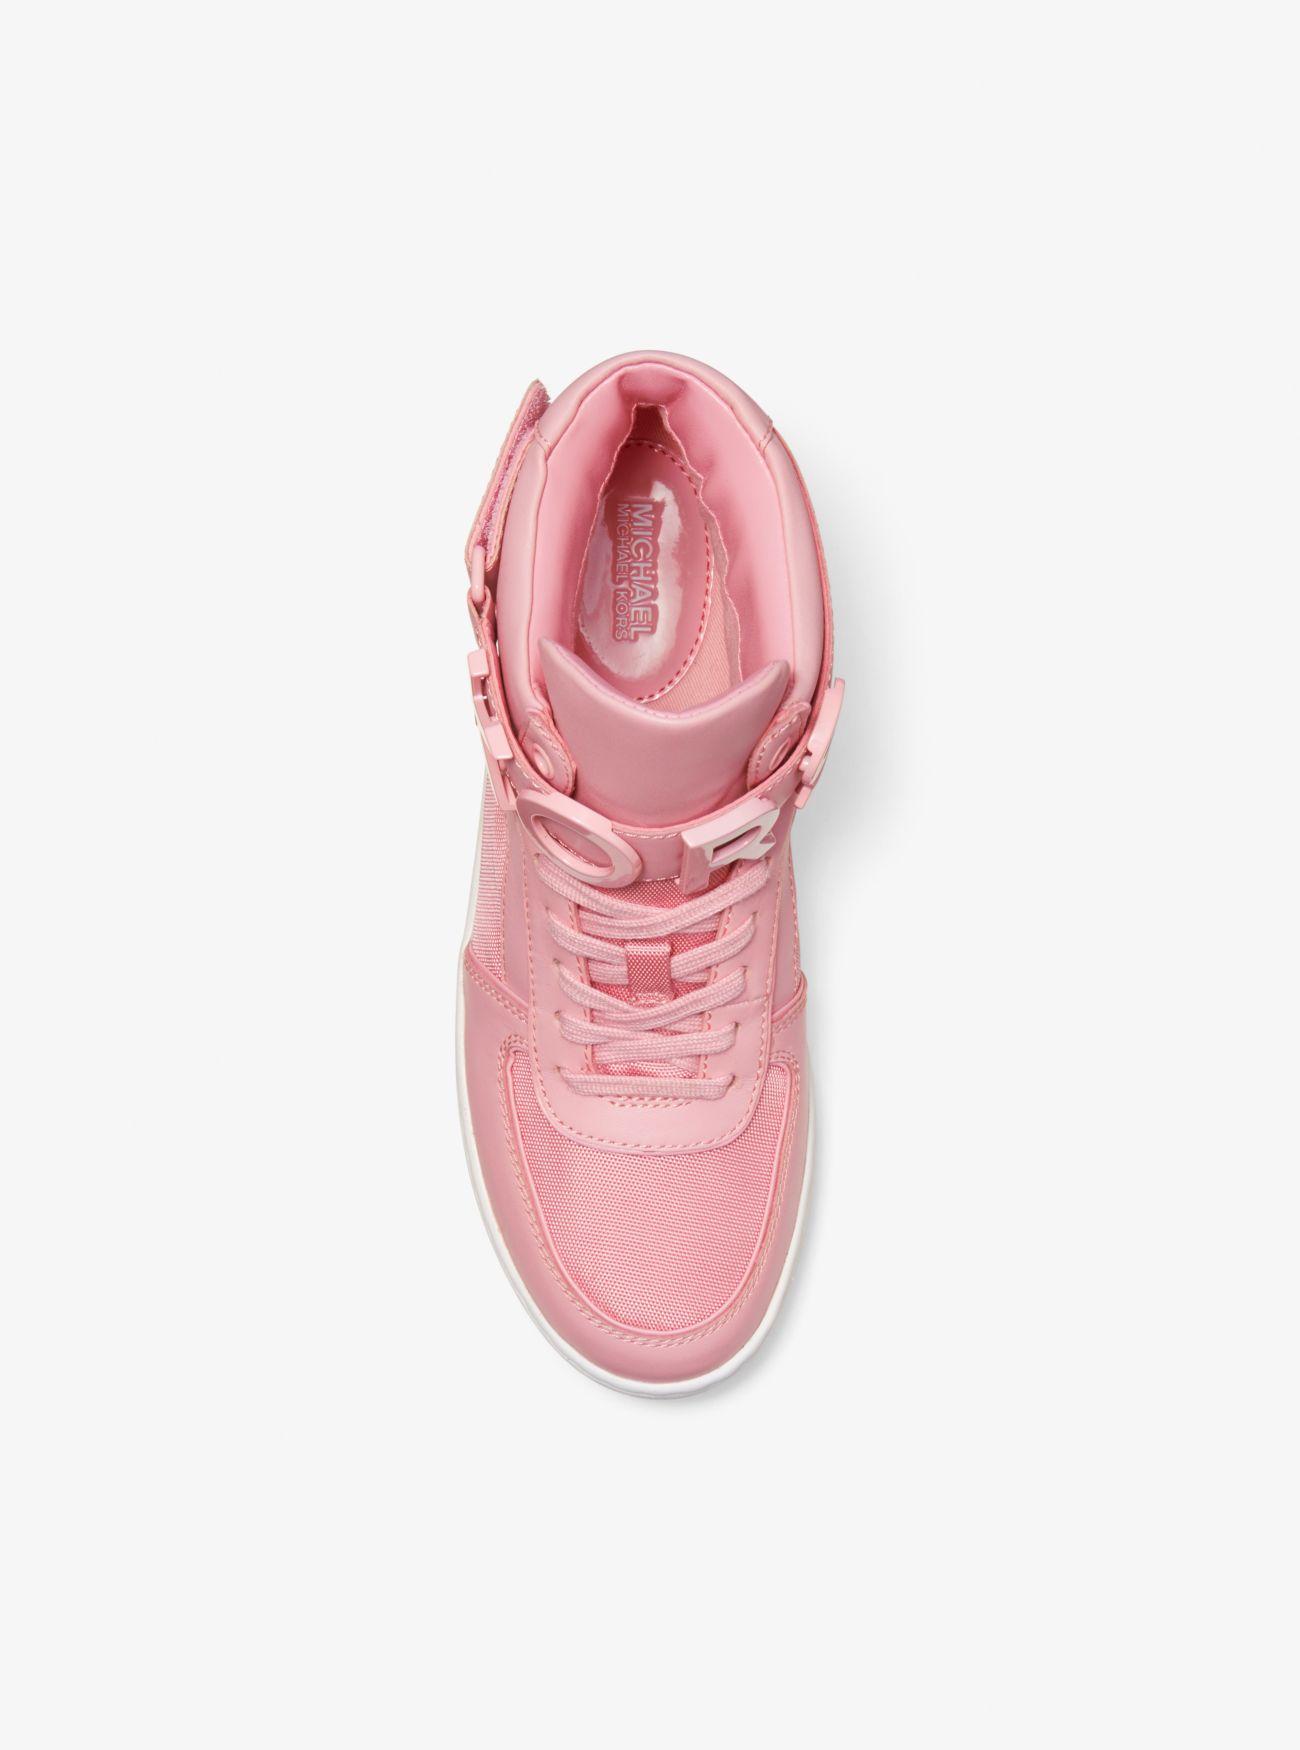 Michael Kors Cortlandt Embellished Leather High-top Sneaker in Pink | Lyst